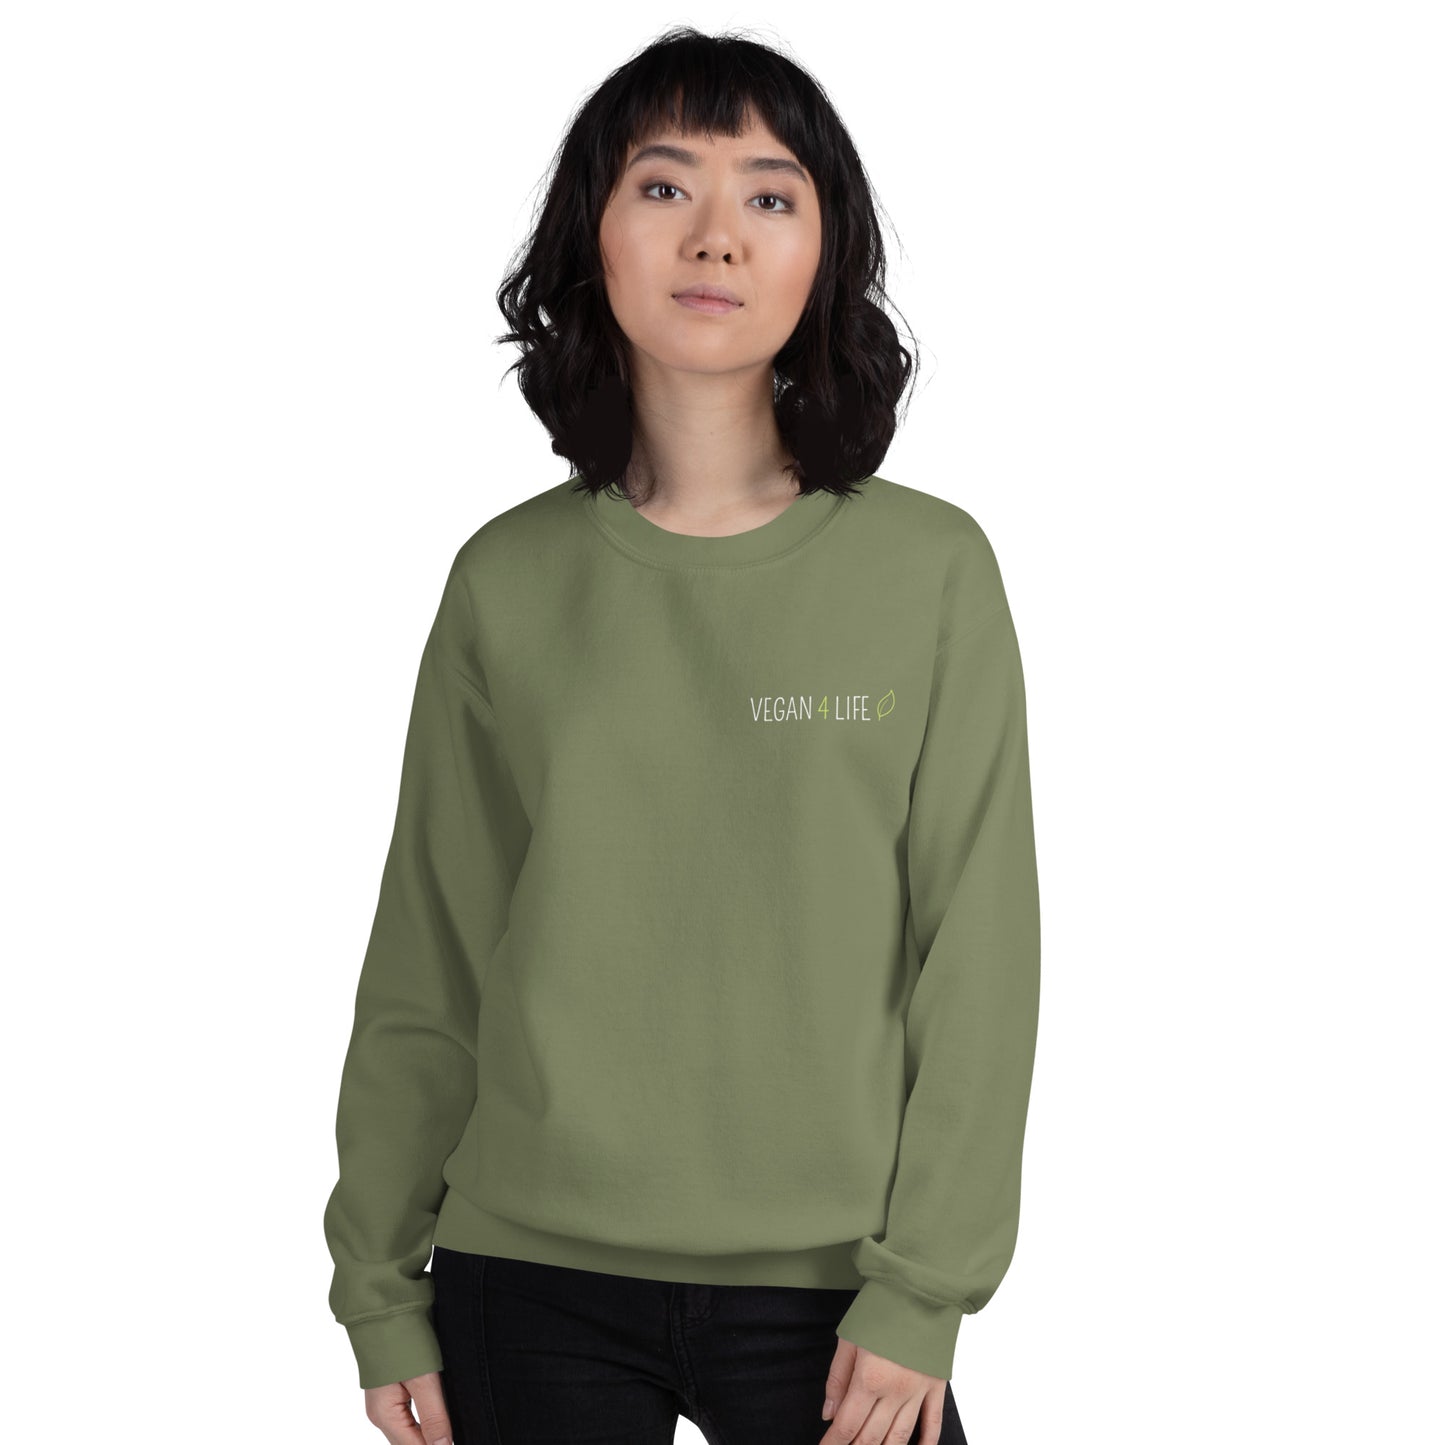 Vegan 4 Life - Unisex Sweatshirt